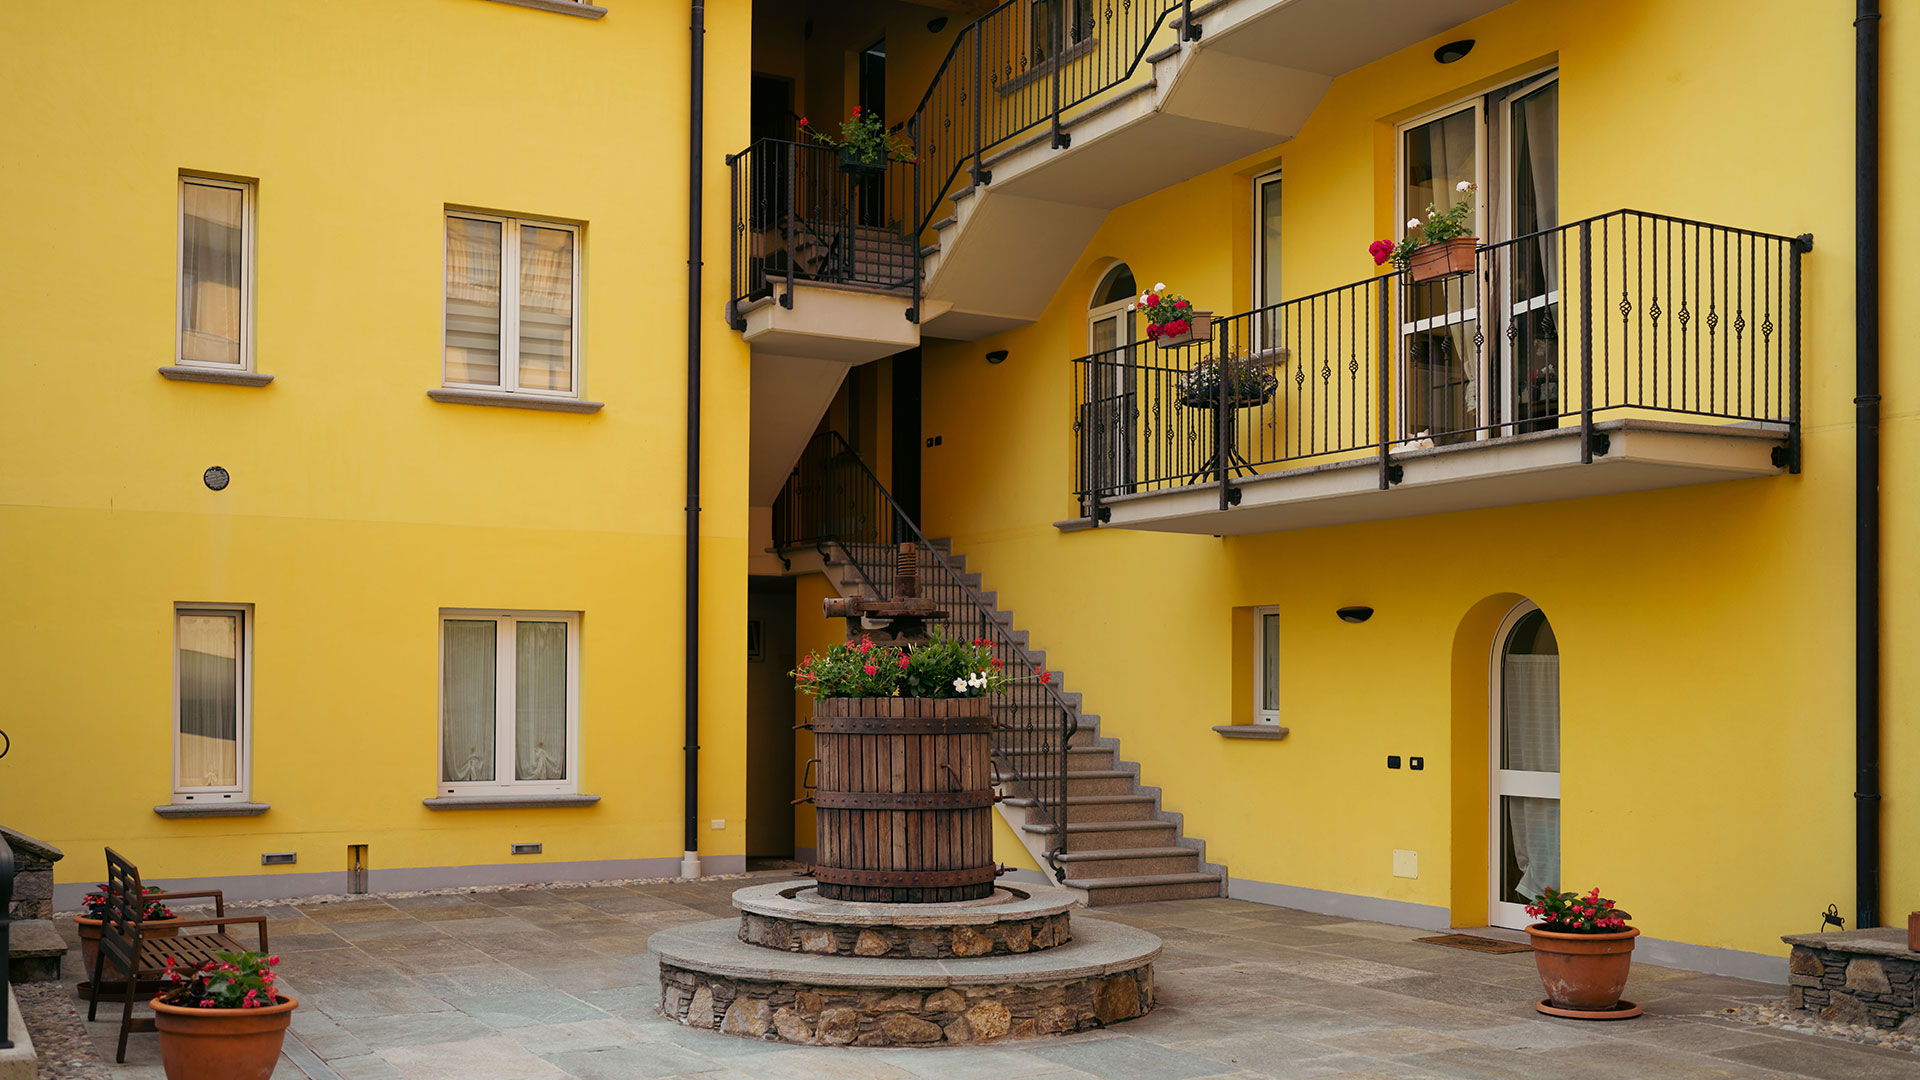 Acero Rosso Apartment, Antico Torchio Residence